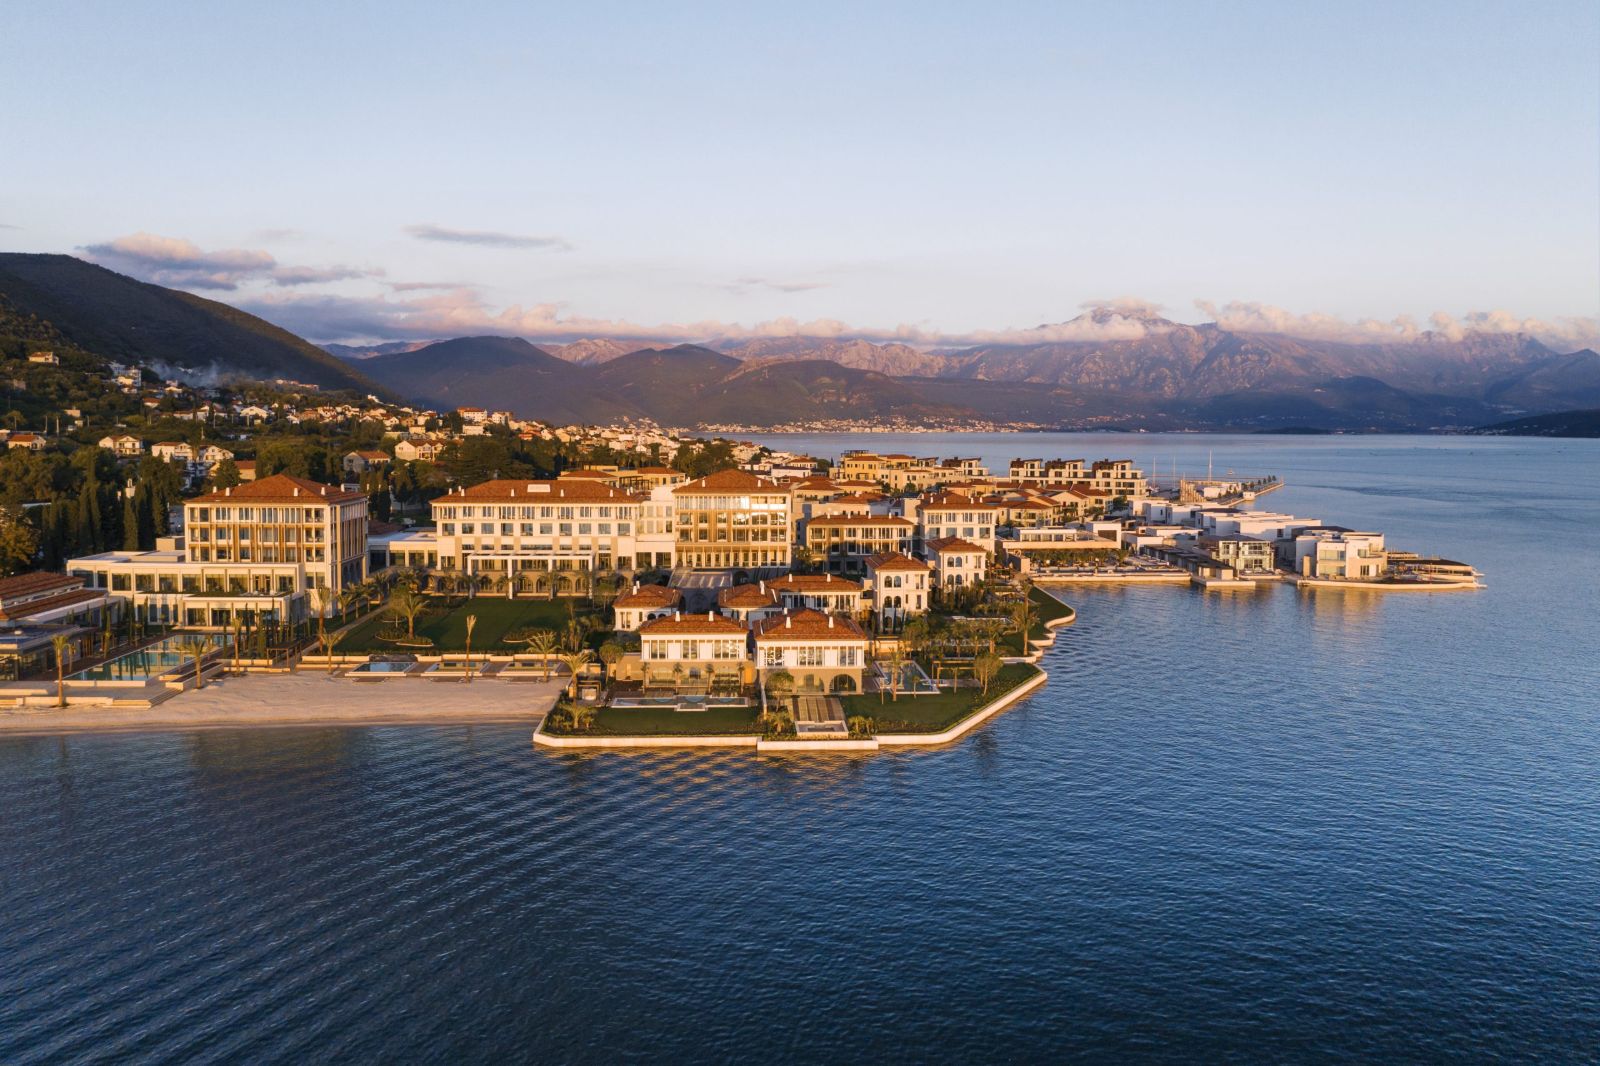 The One&Only Portonovi in Montenegro and surrounding coastline